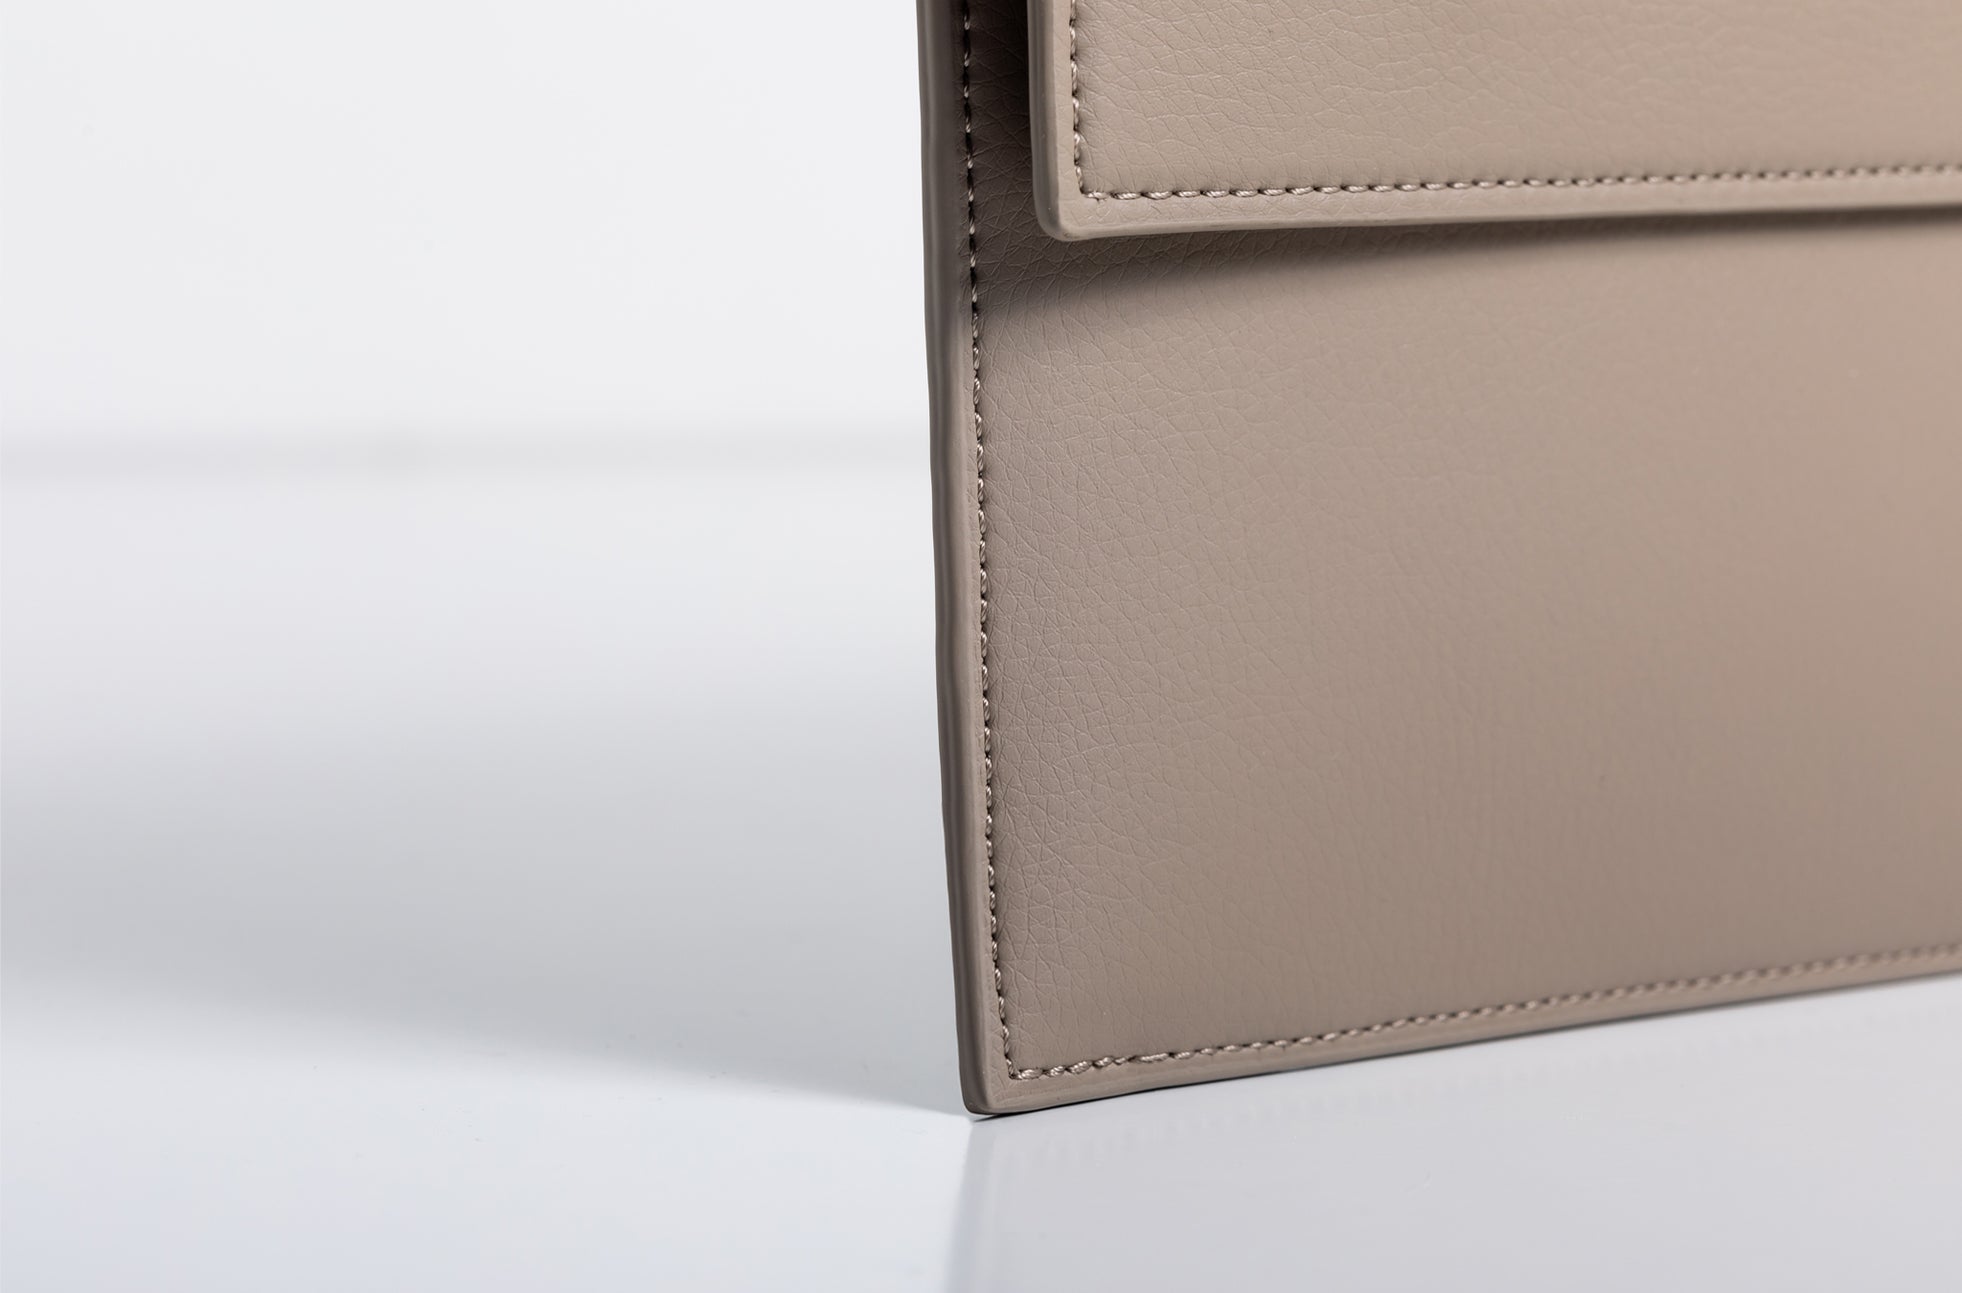 The iPad Portfolio 12.9-inch - Sample Sale in Technik-Leather in Stone image 6